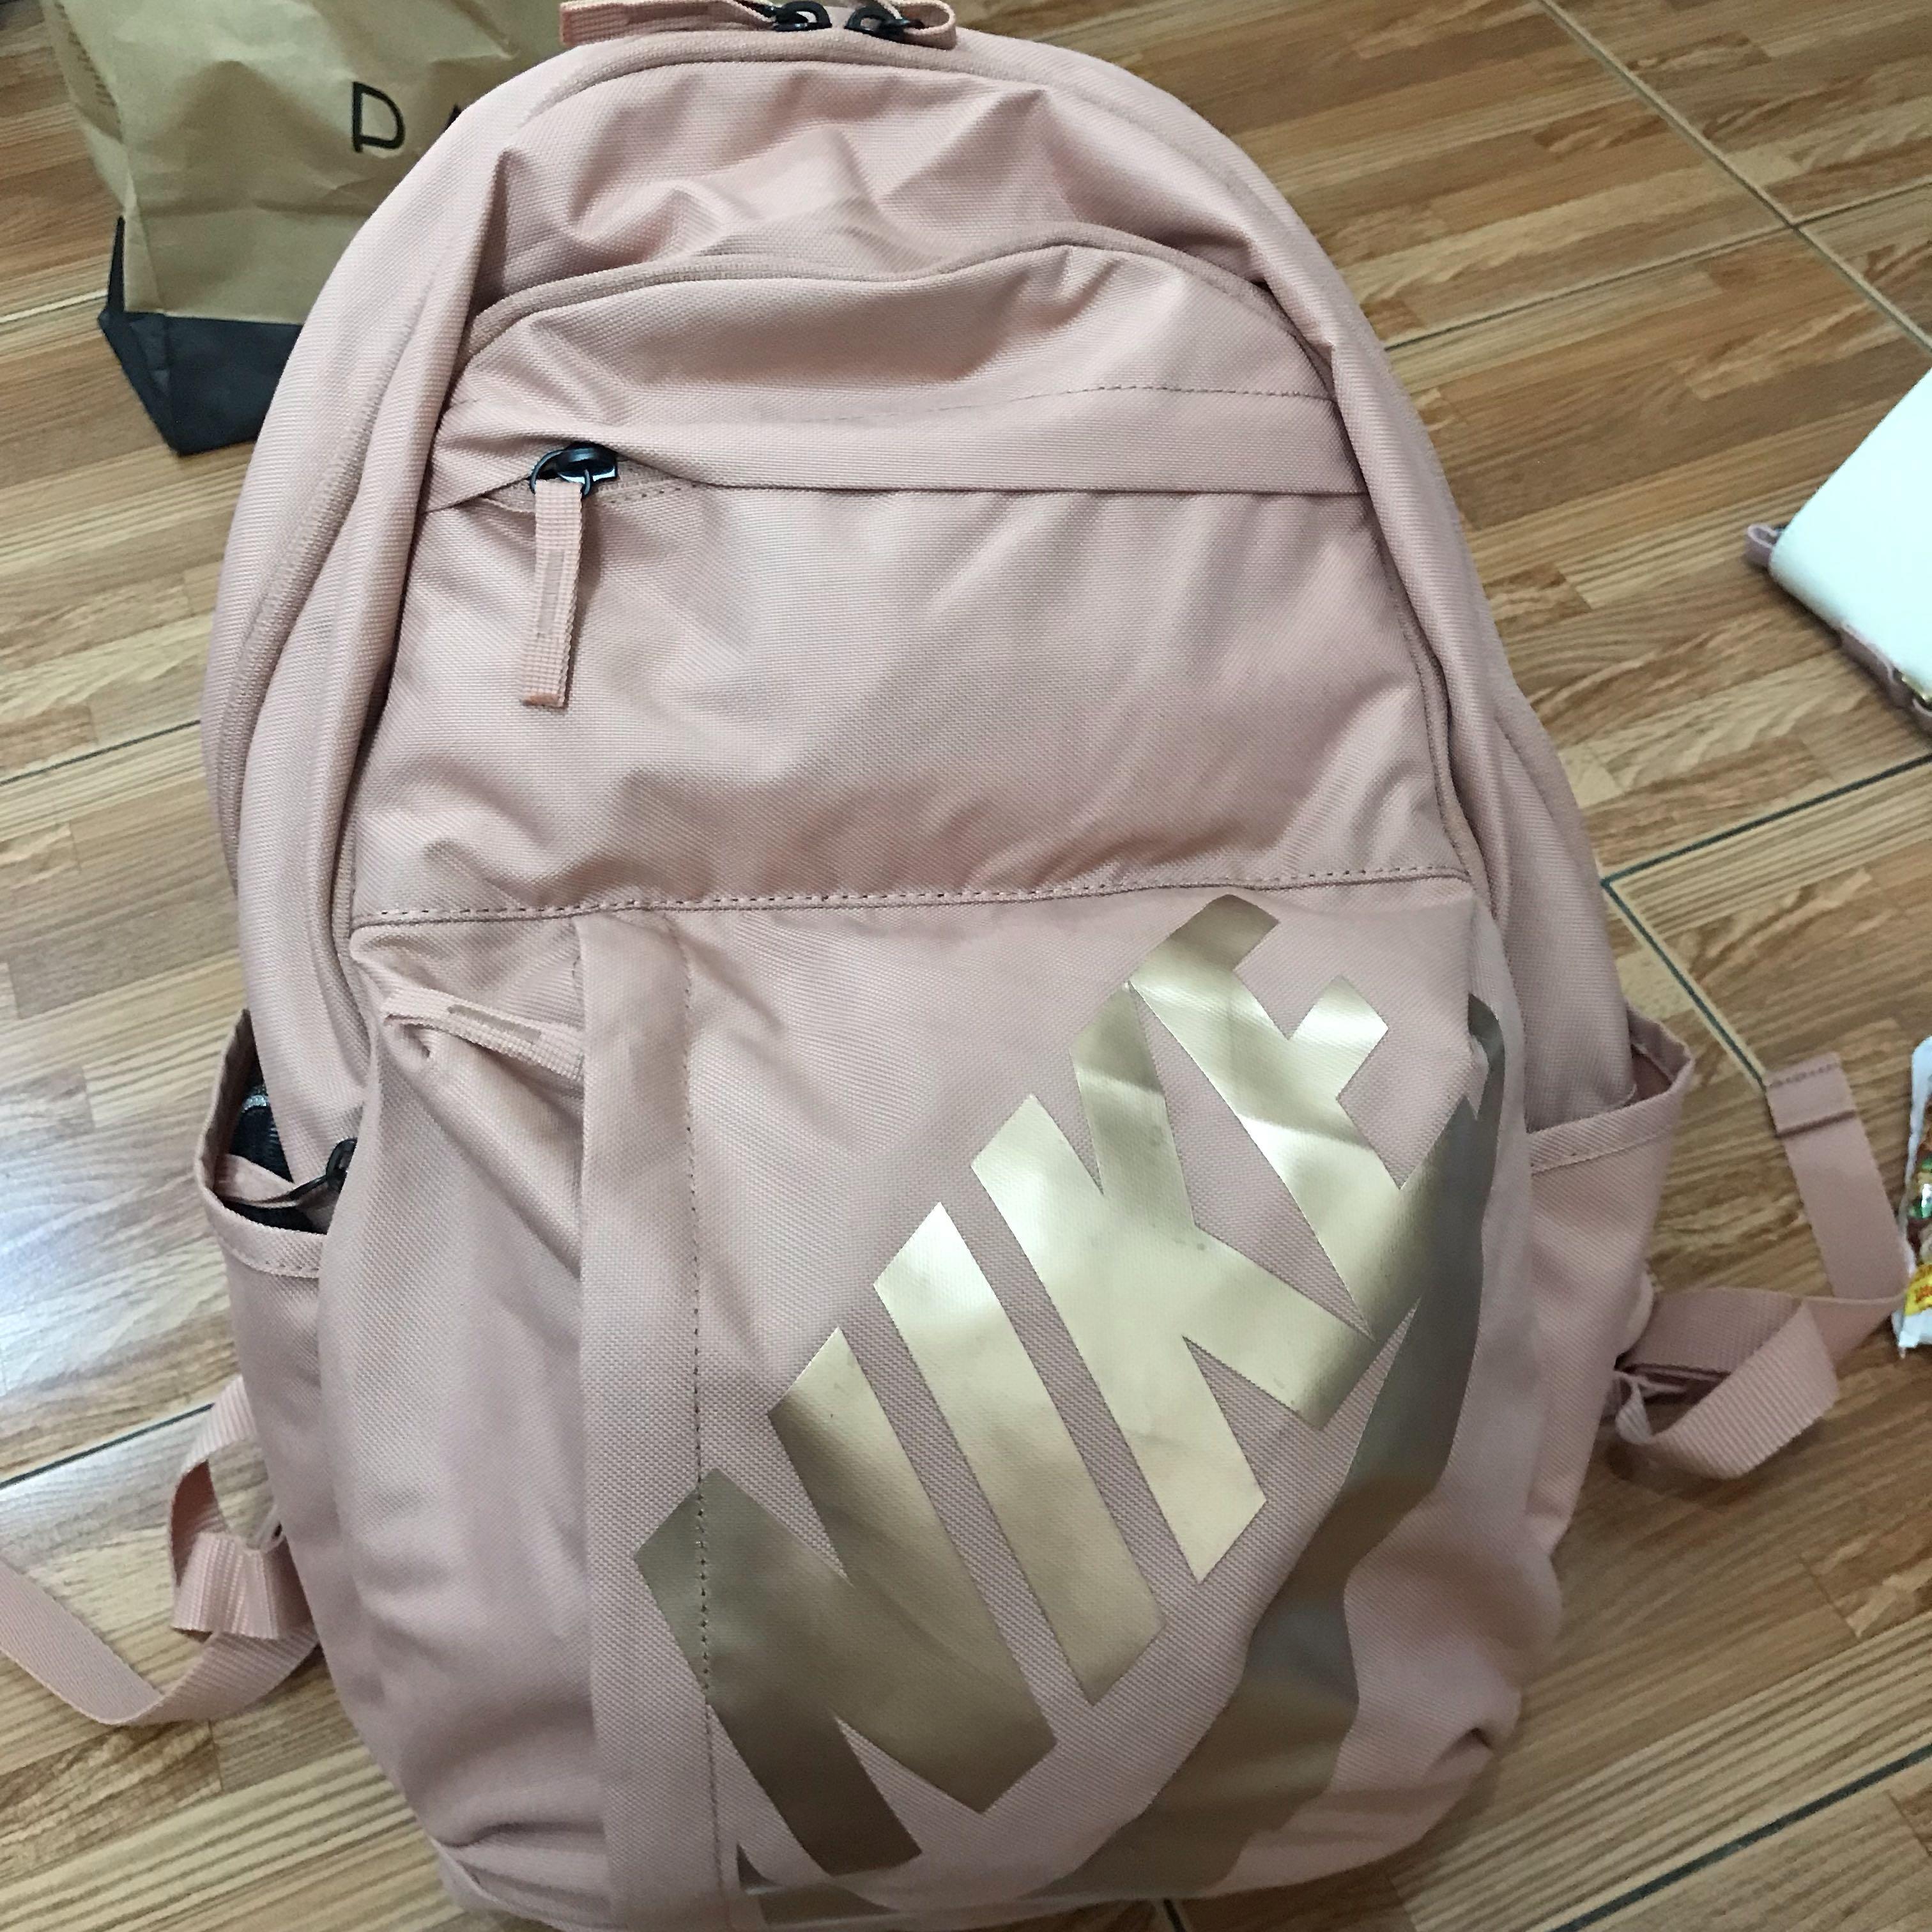 nike rose gold backpack